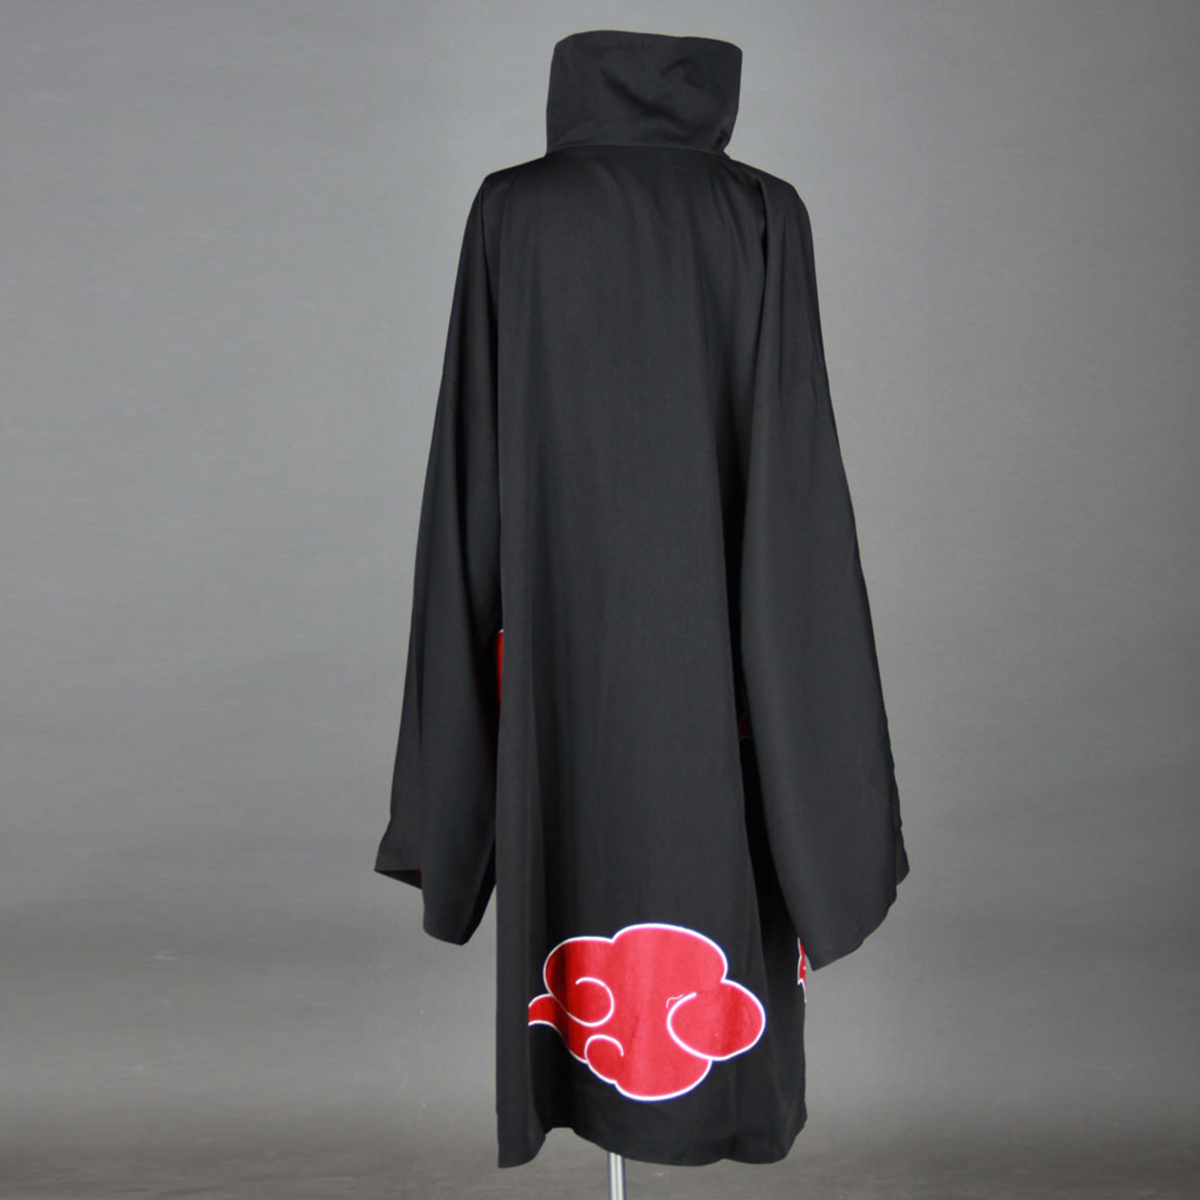 Naruto Akatsuki Organization 2 Anime Cosplay Costumes Outfit